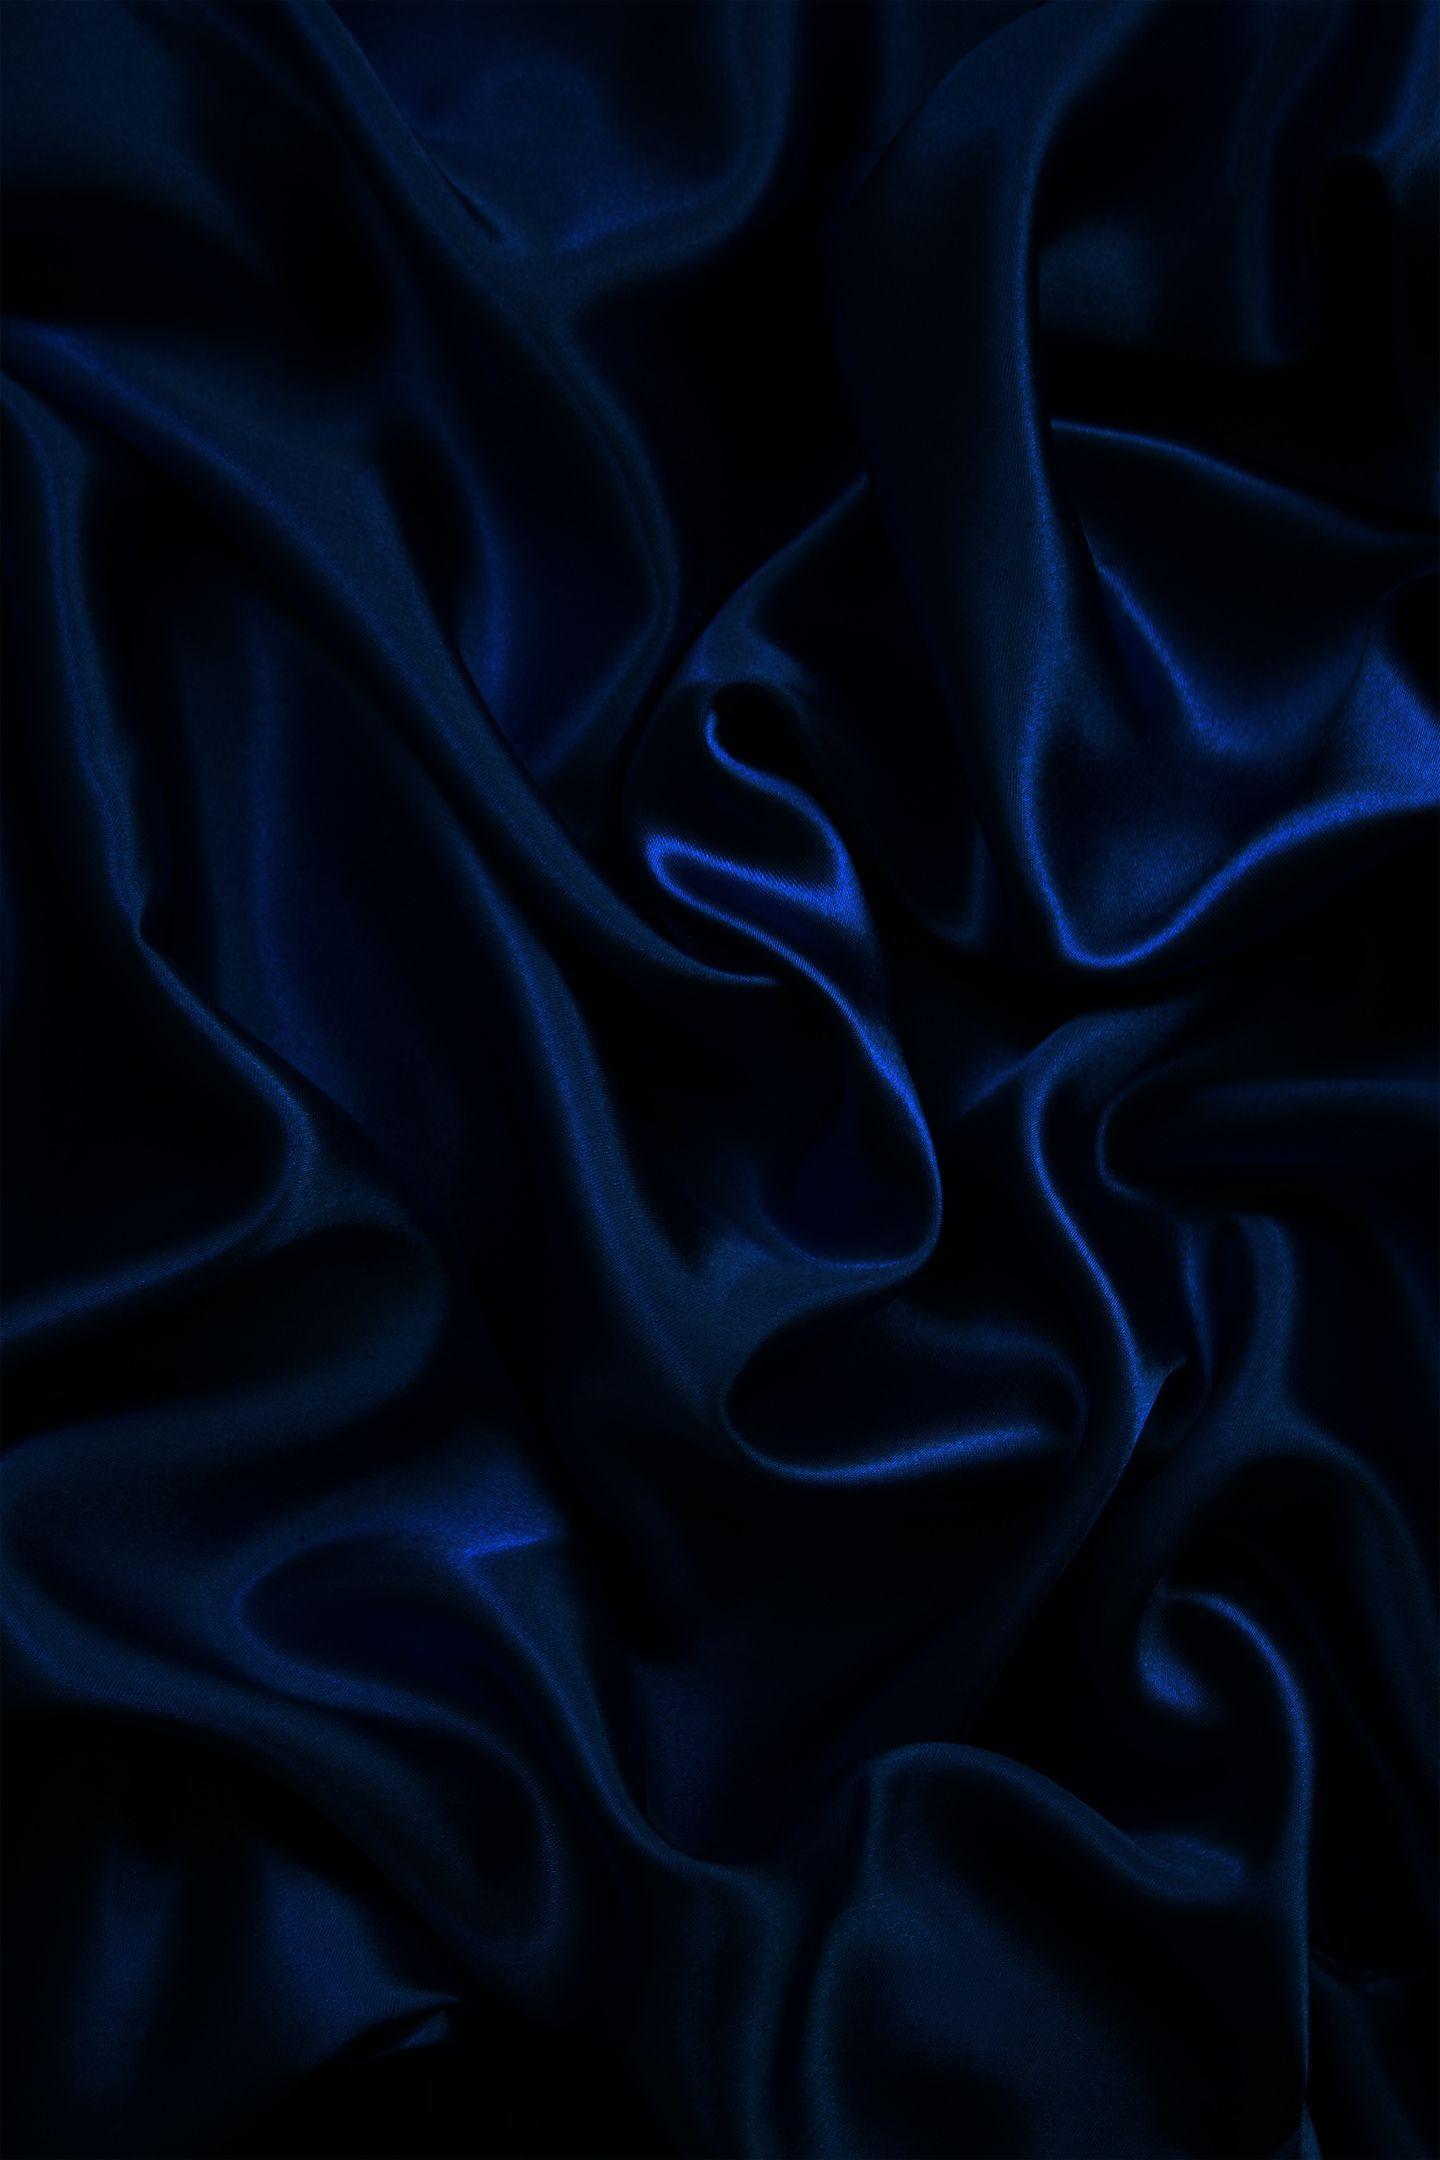 Midnight Blue Satin Background 6058 1440x2160 px WallpaperFort.com